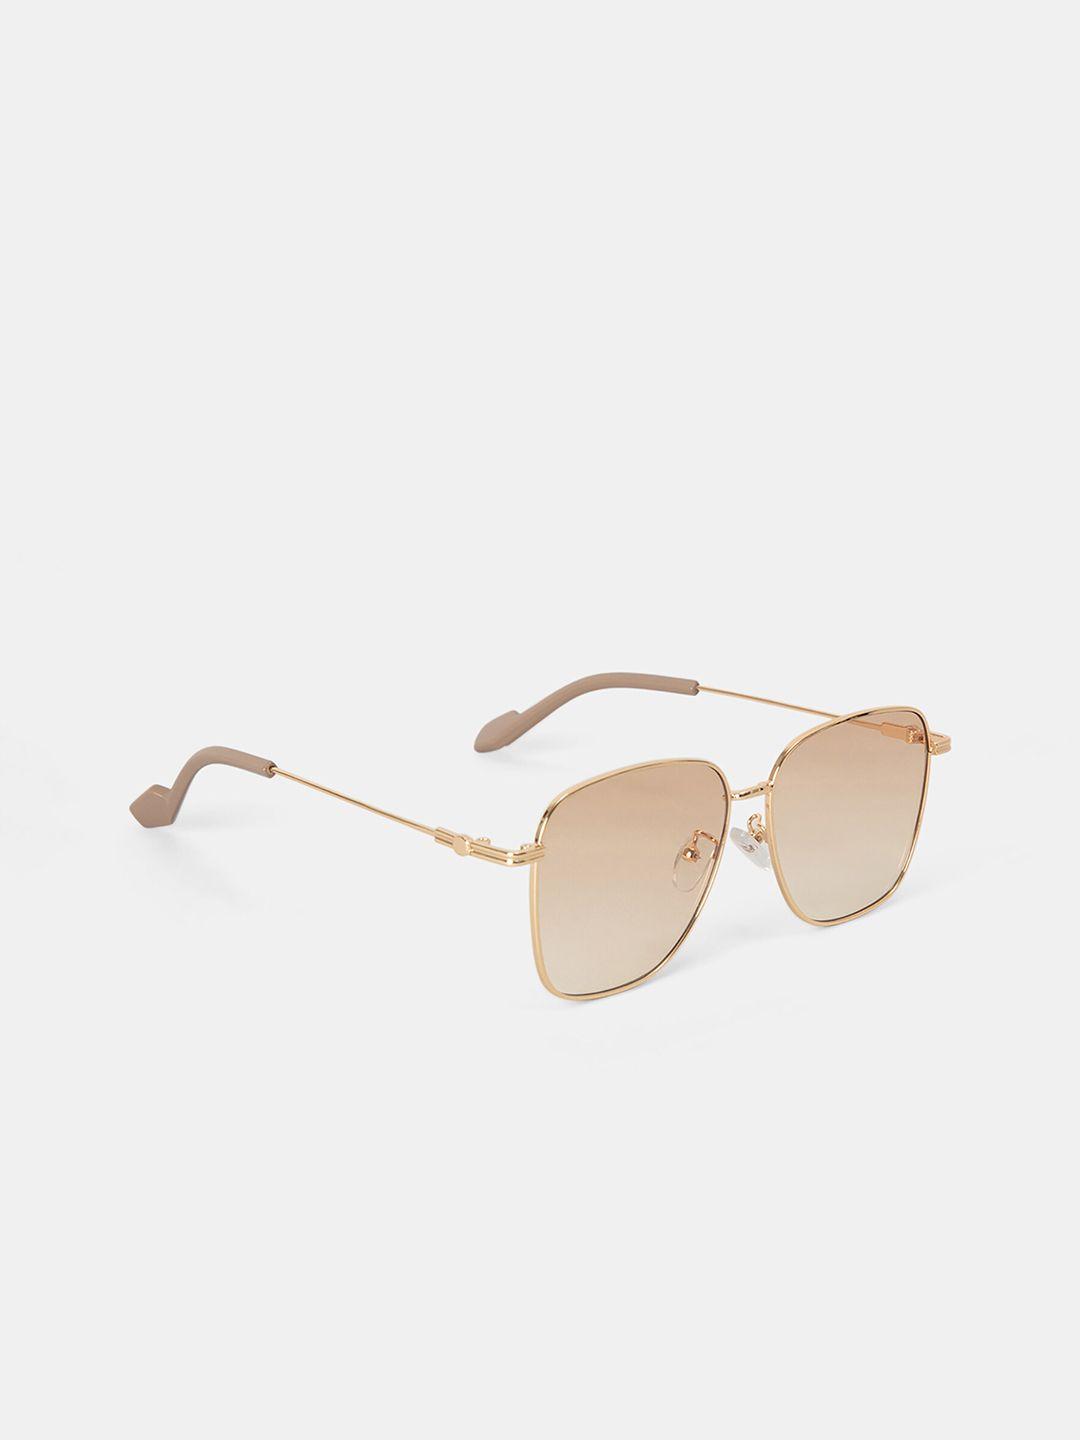 20dresses women brown lens & gold-toned square sunglasses